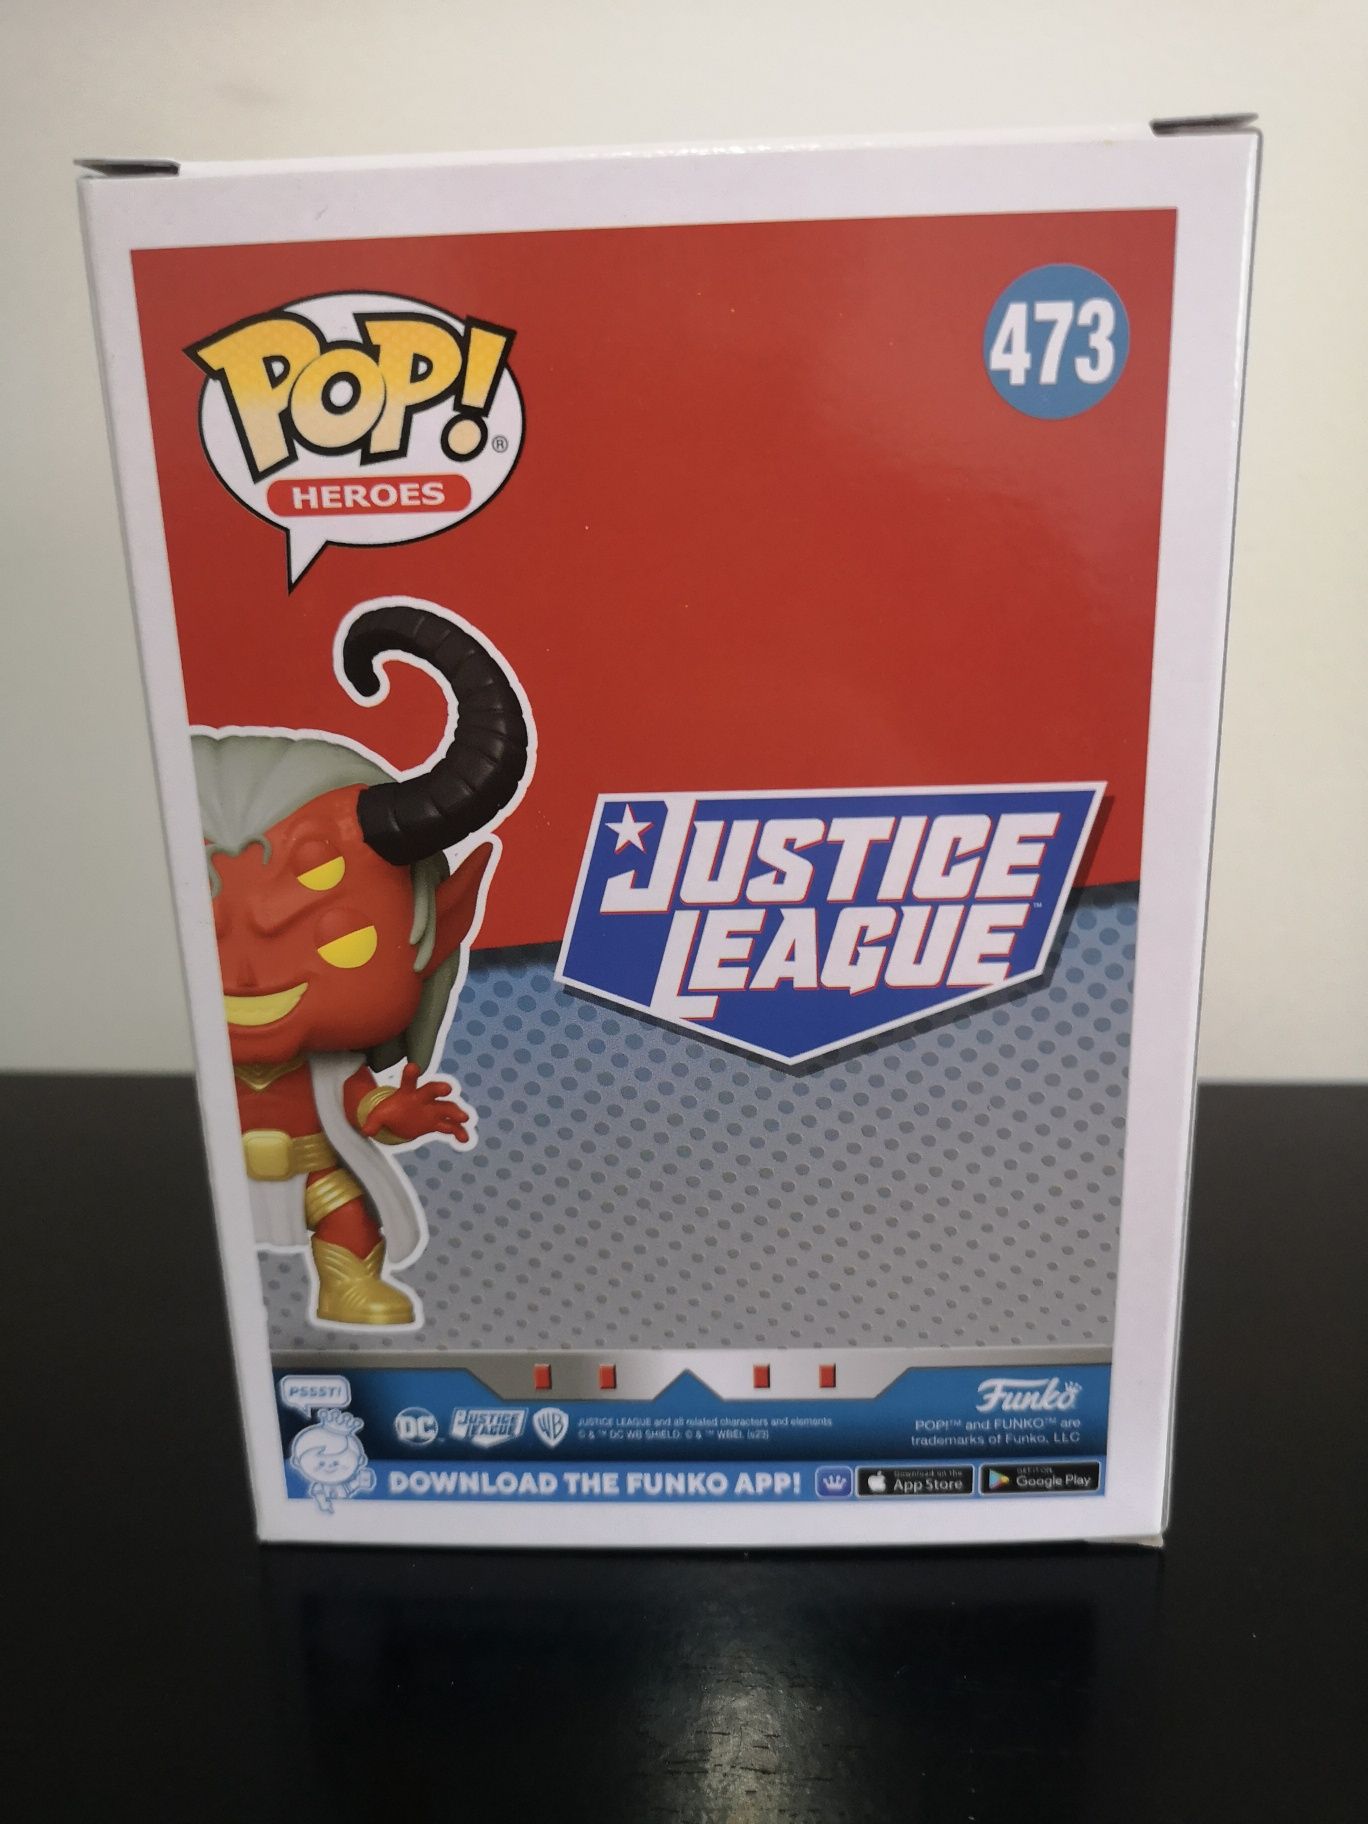 Funko pop Trigon Justice League 473 Limited Edition